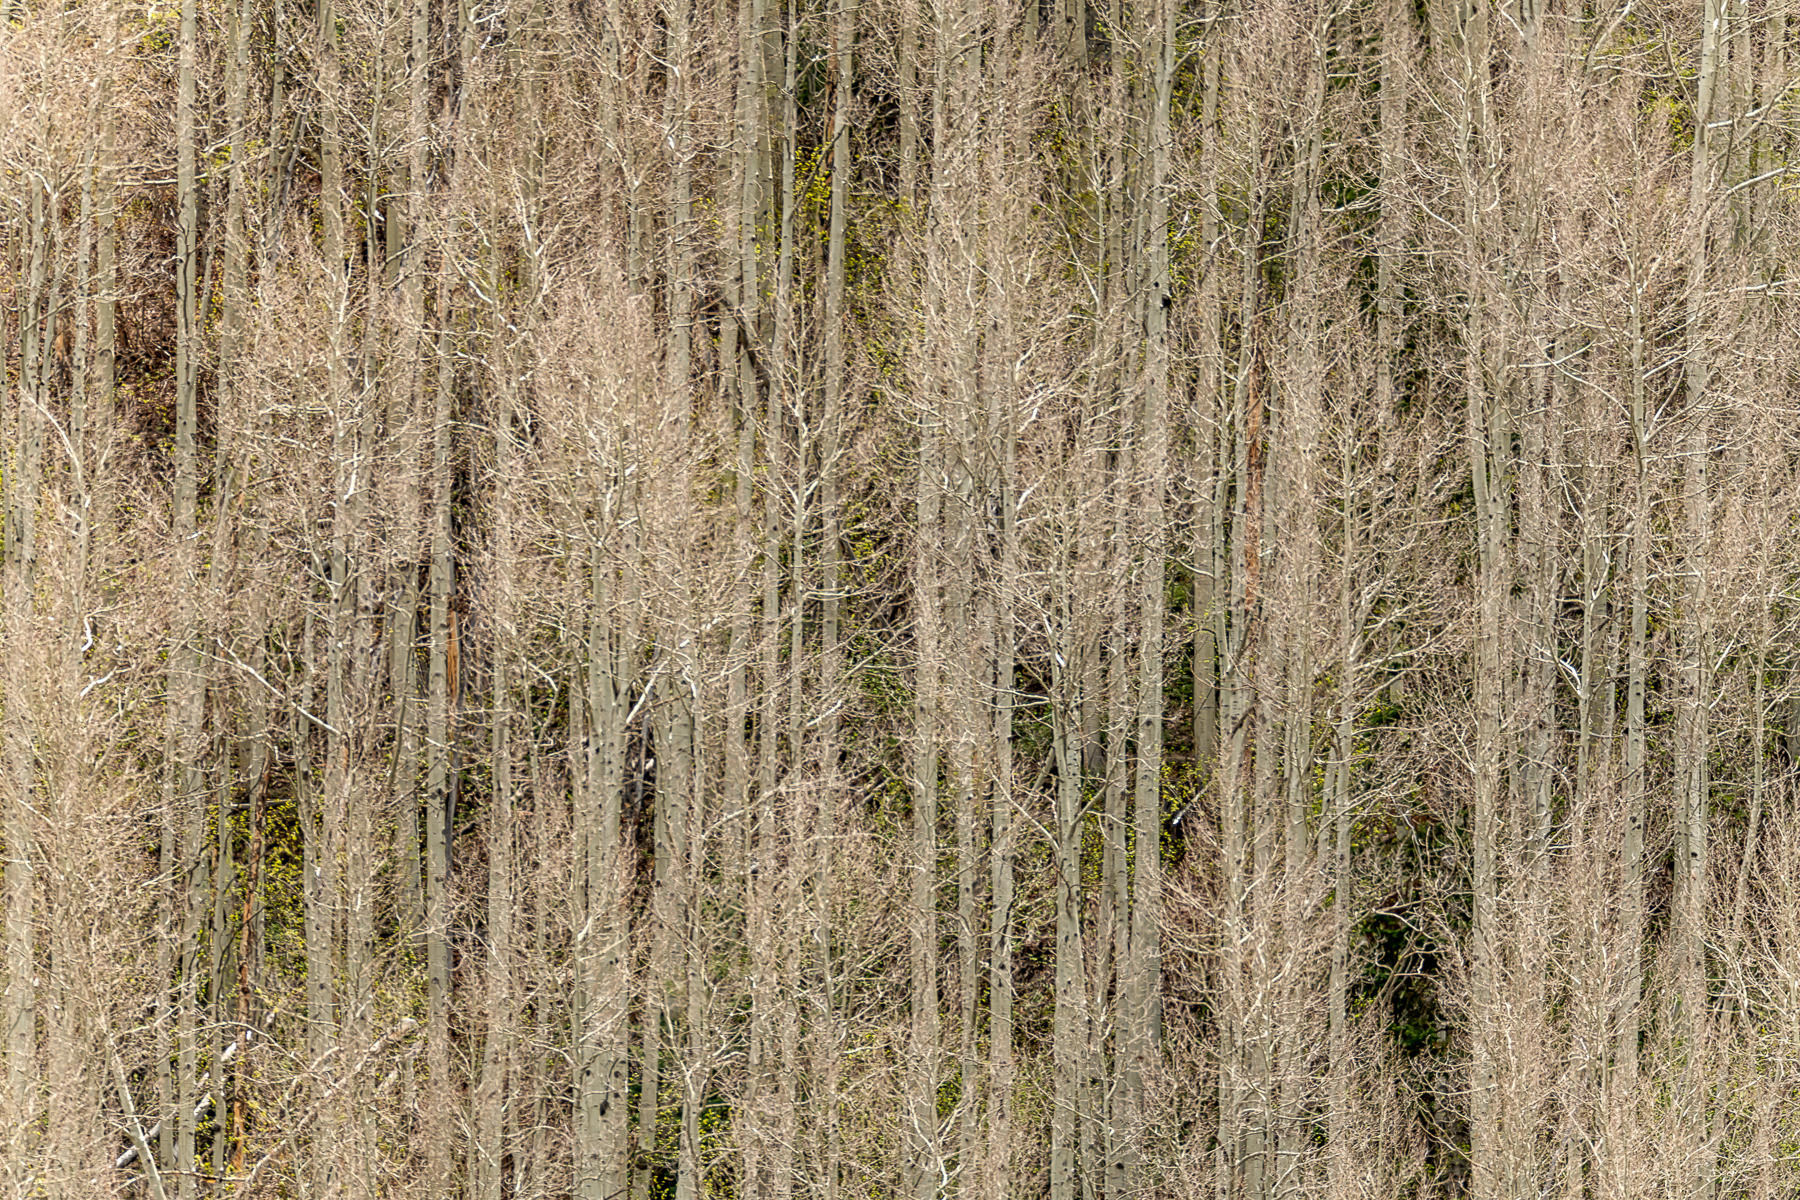 Apsens in Spring : Trees, Our Oxygen : ELIZABETH SANJUAN PHOTOGRAPHY